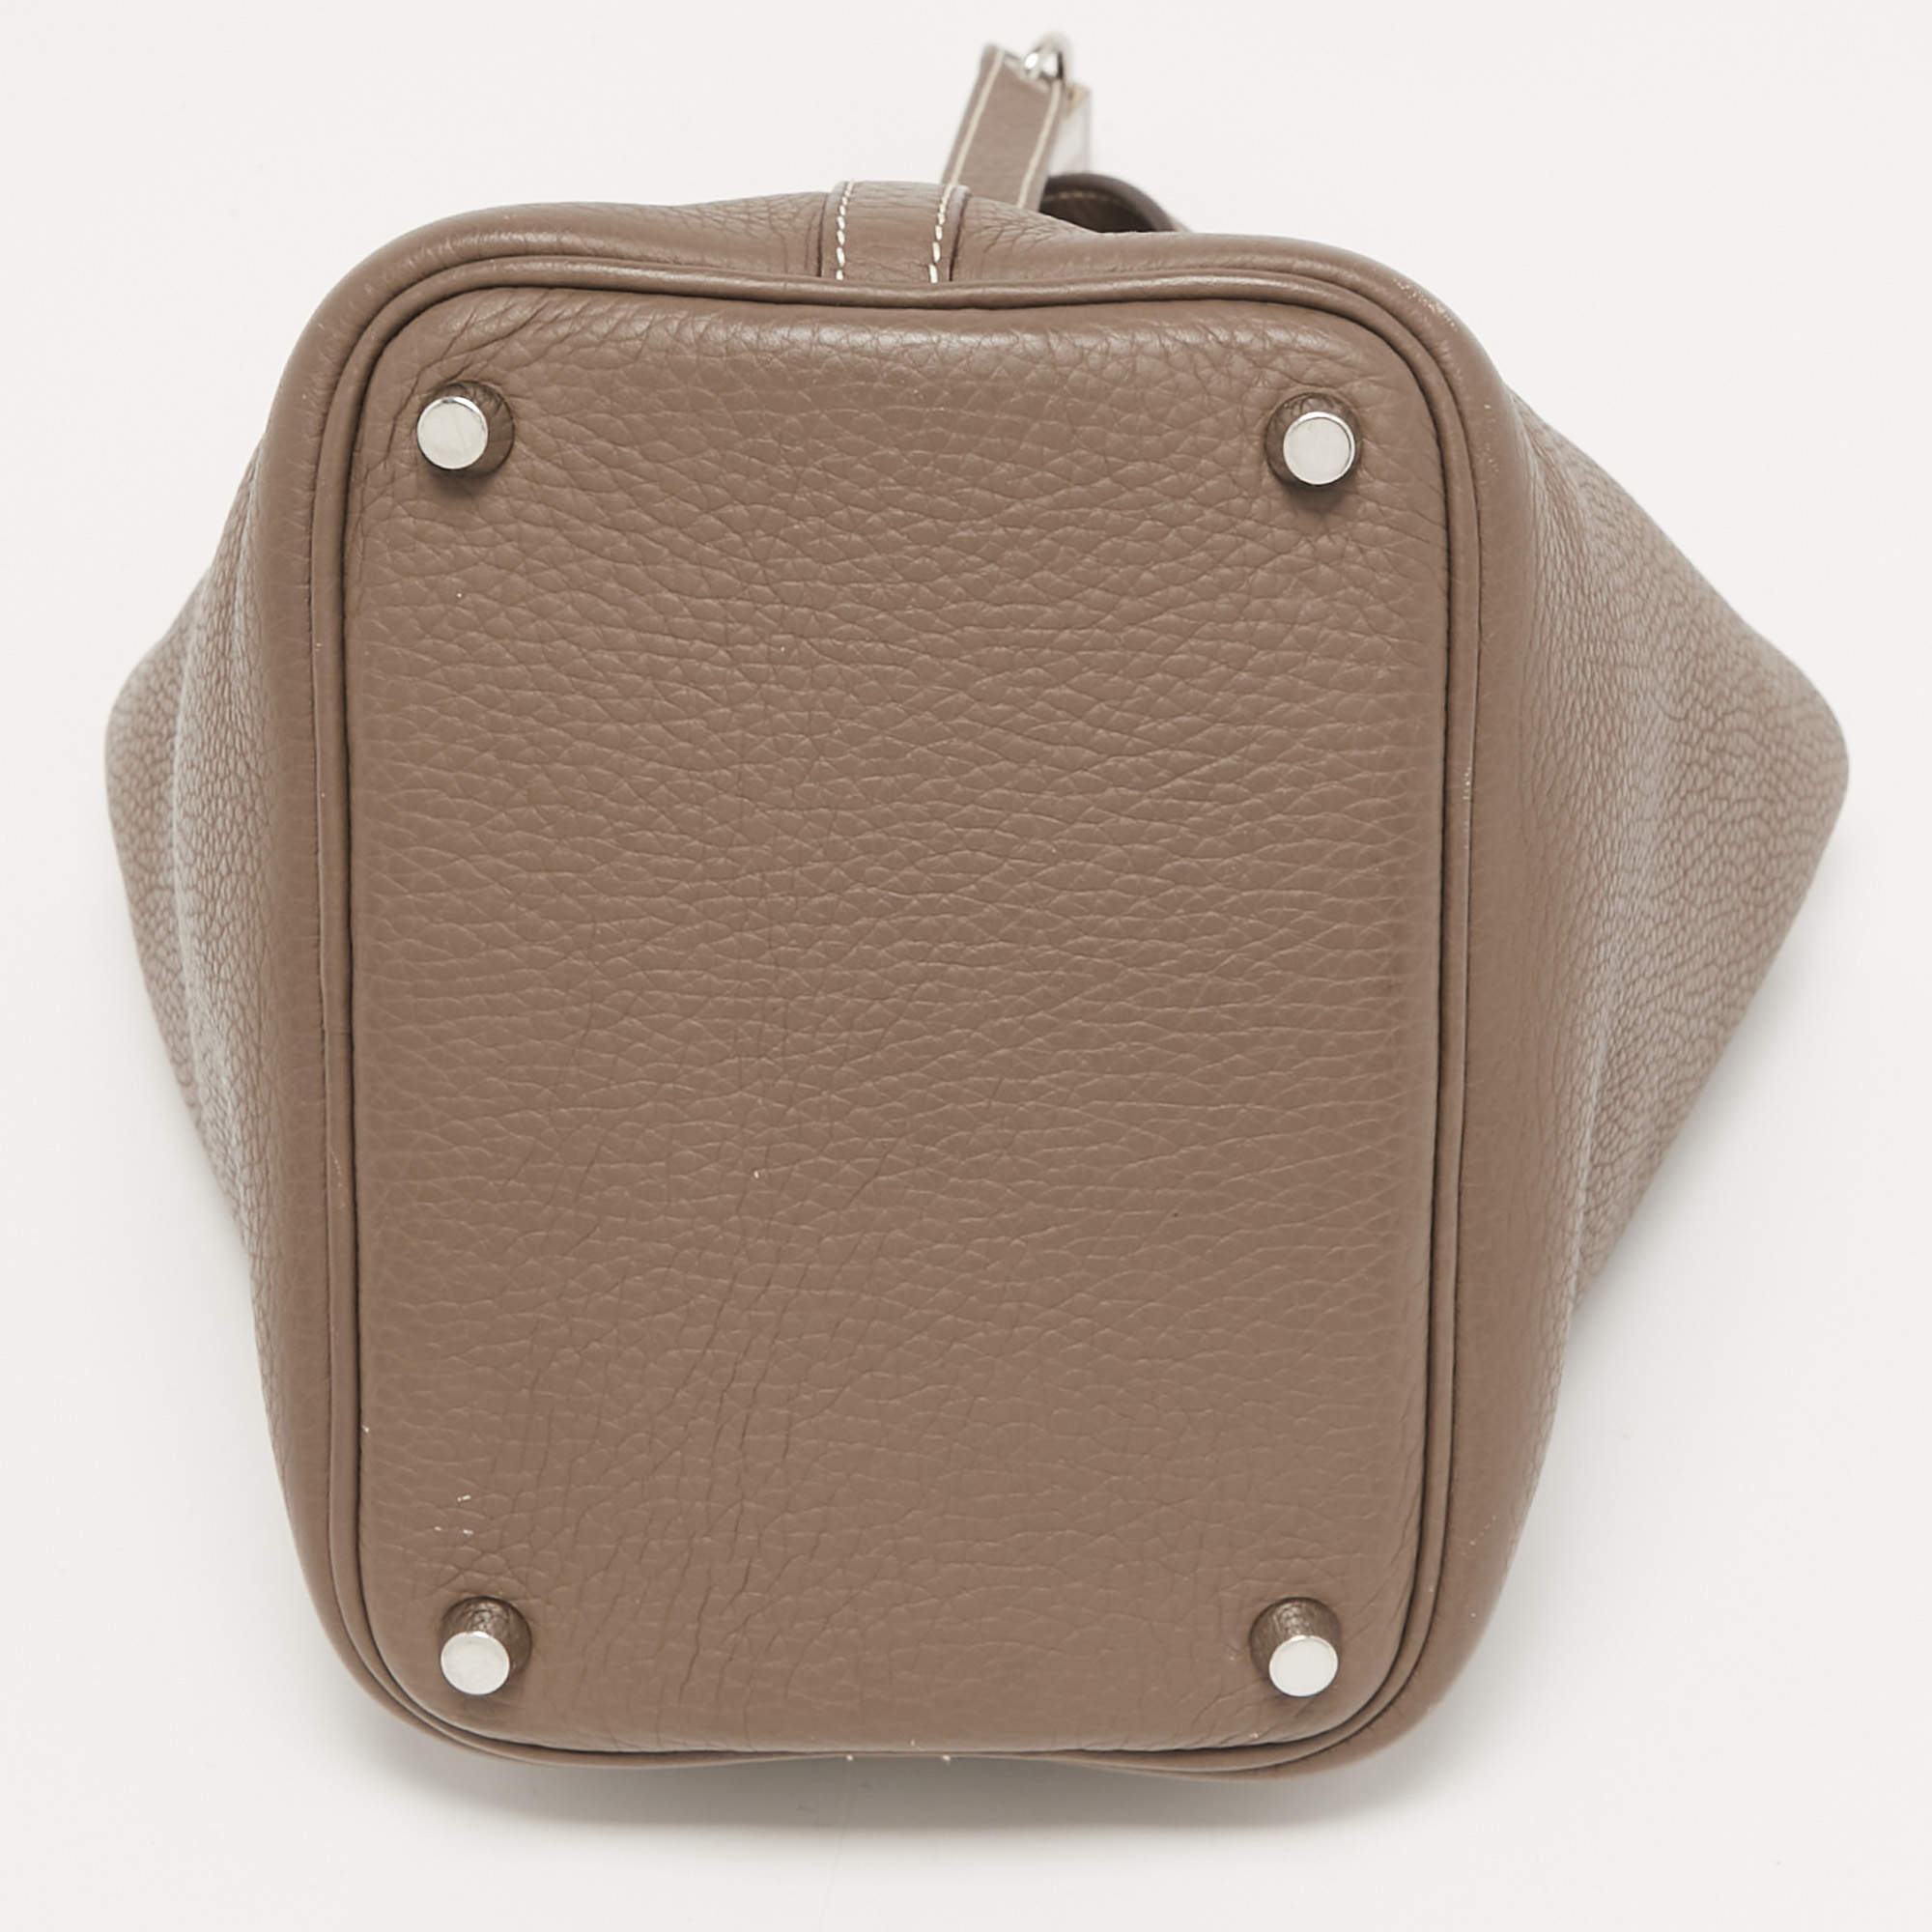 An Hermes Etoupe Leather Thar Travel Bag. 21.5 x 18 x 10.